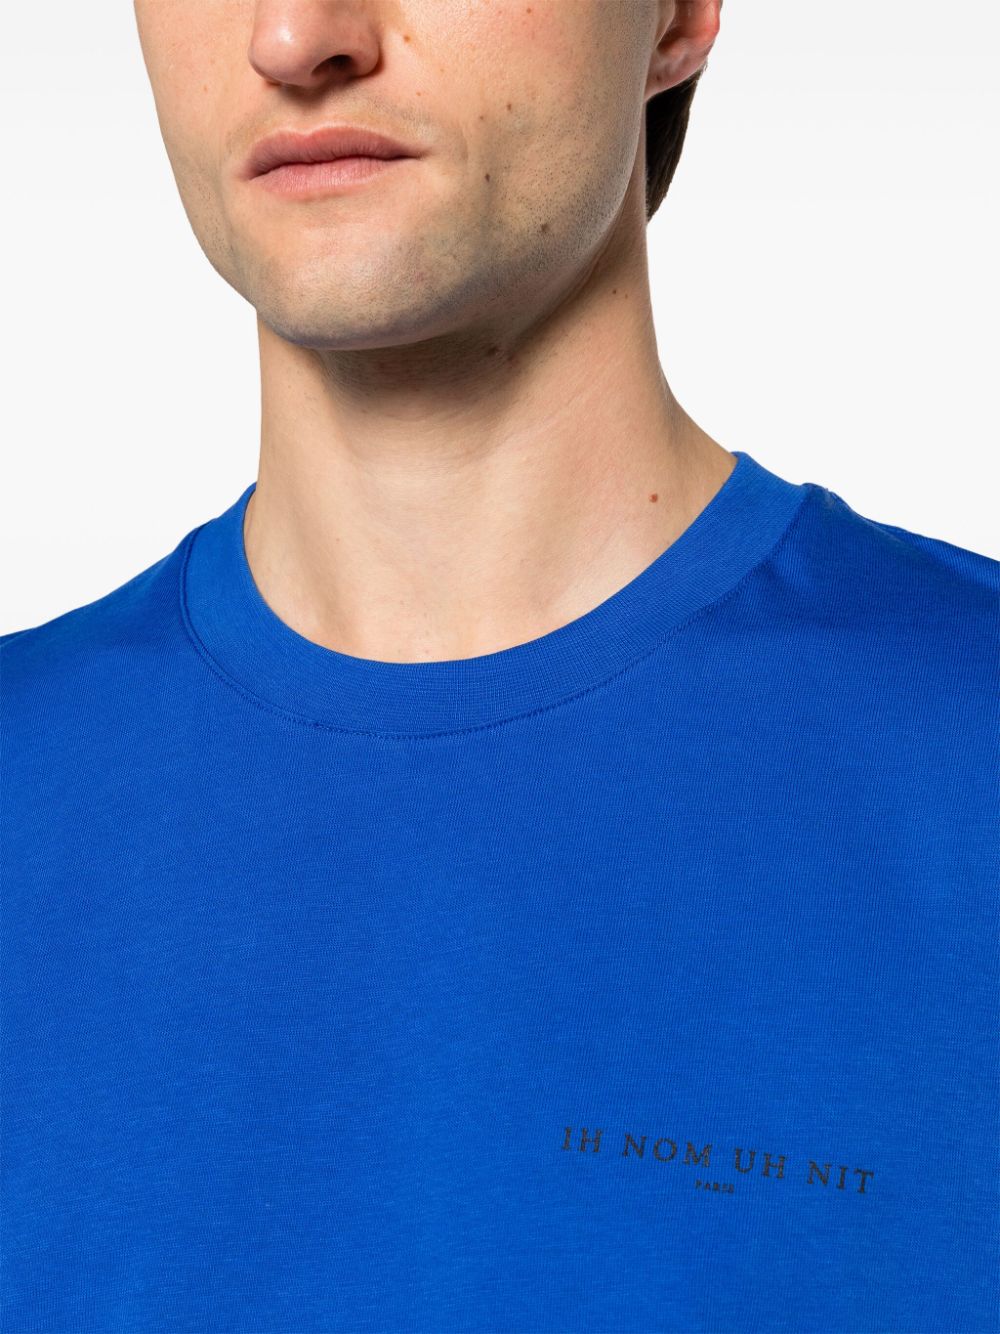 T-shirt bleu roi avec écriture logo